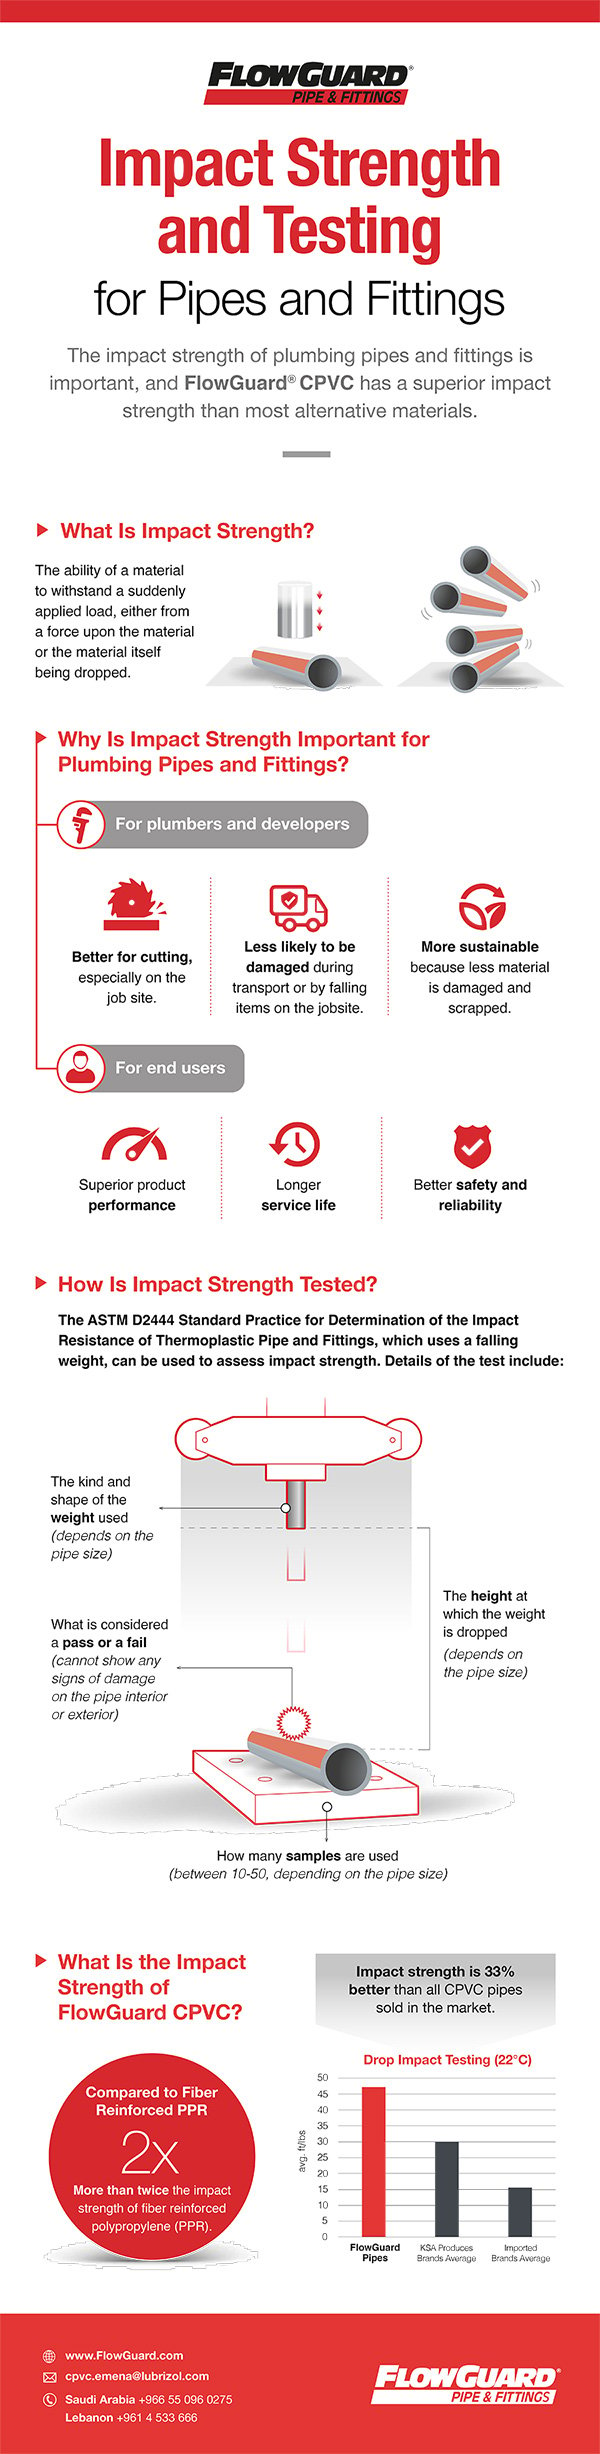 Impact Strength Infographic